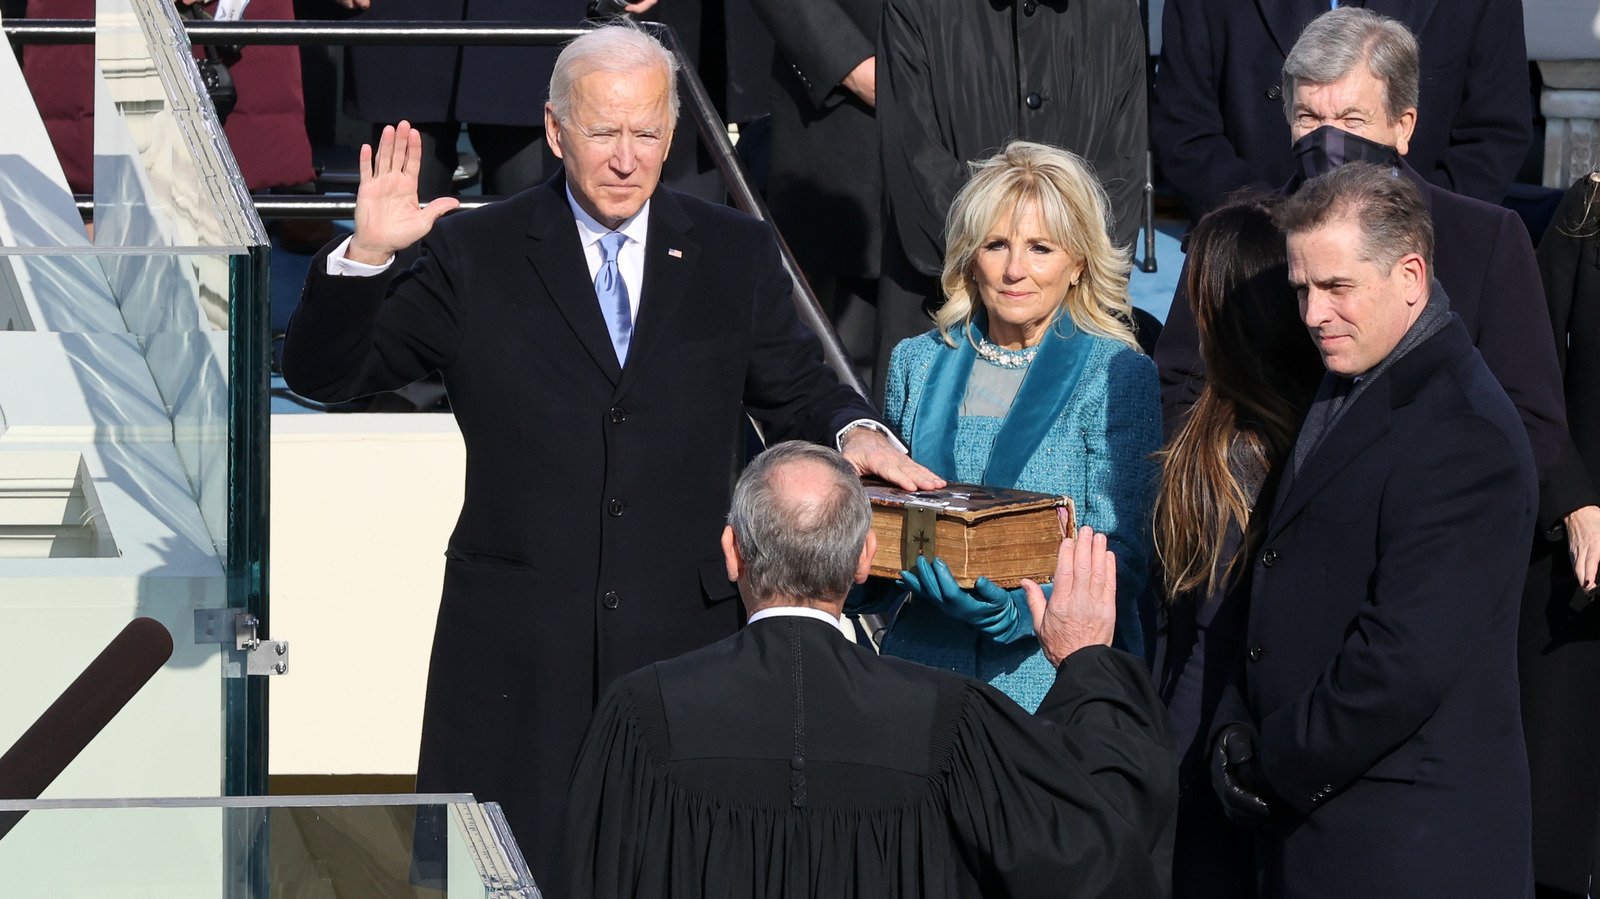 Joe Biden's Body Language During His Inauguration Spoke Volumes